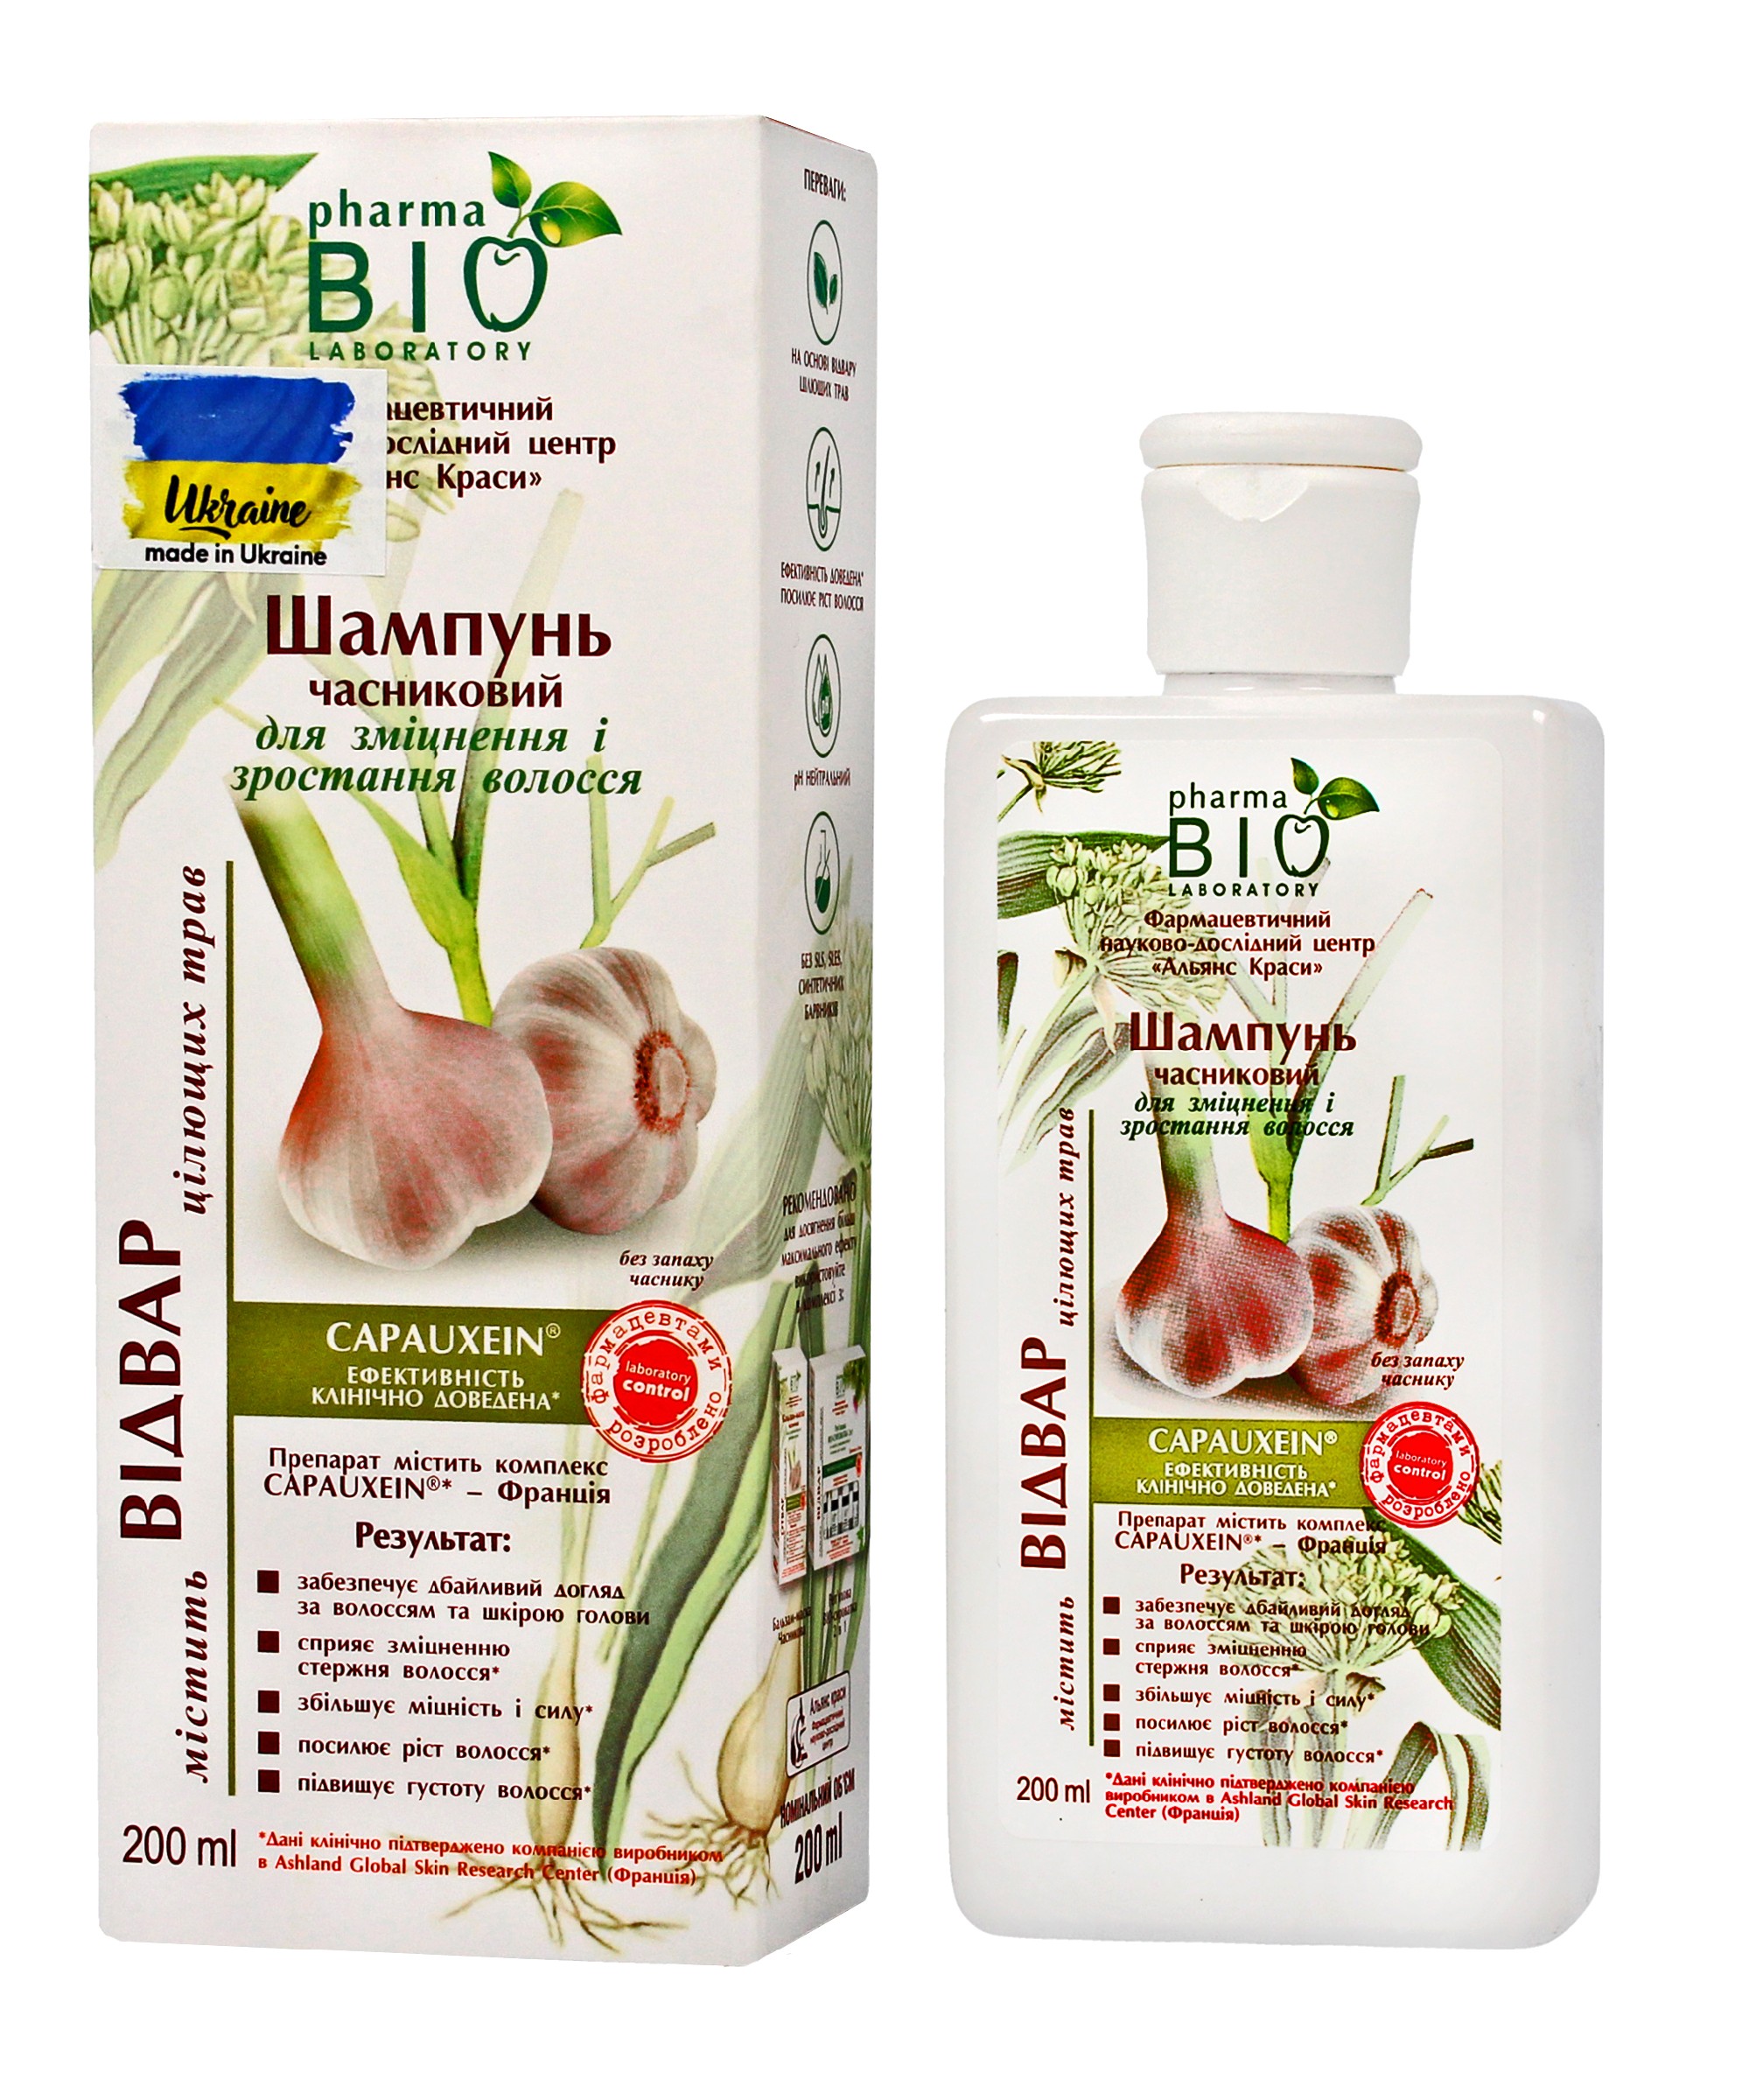 bio szampon